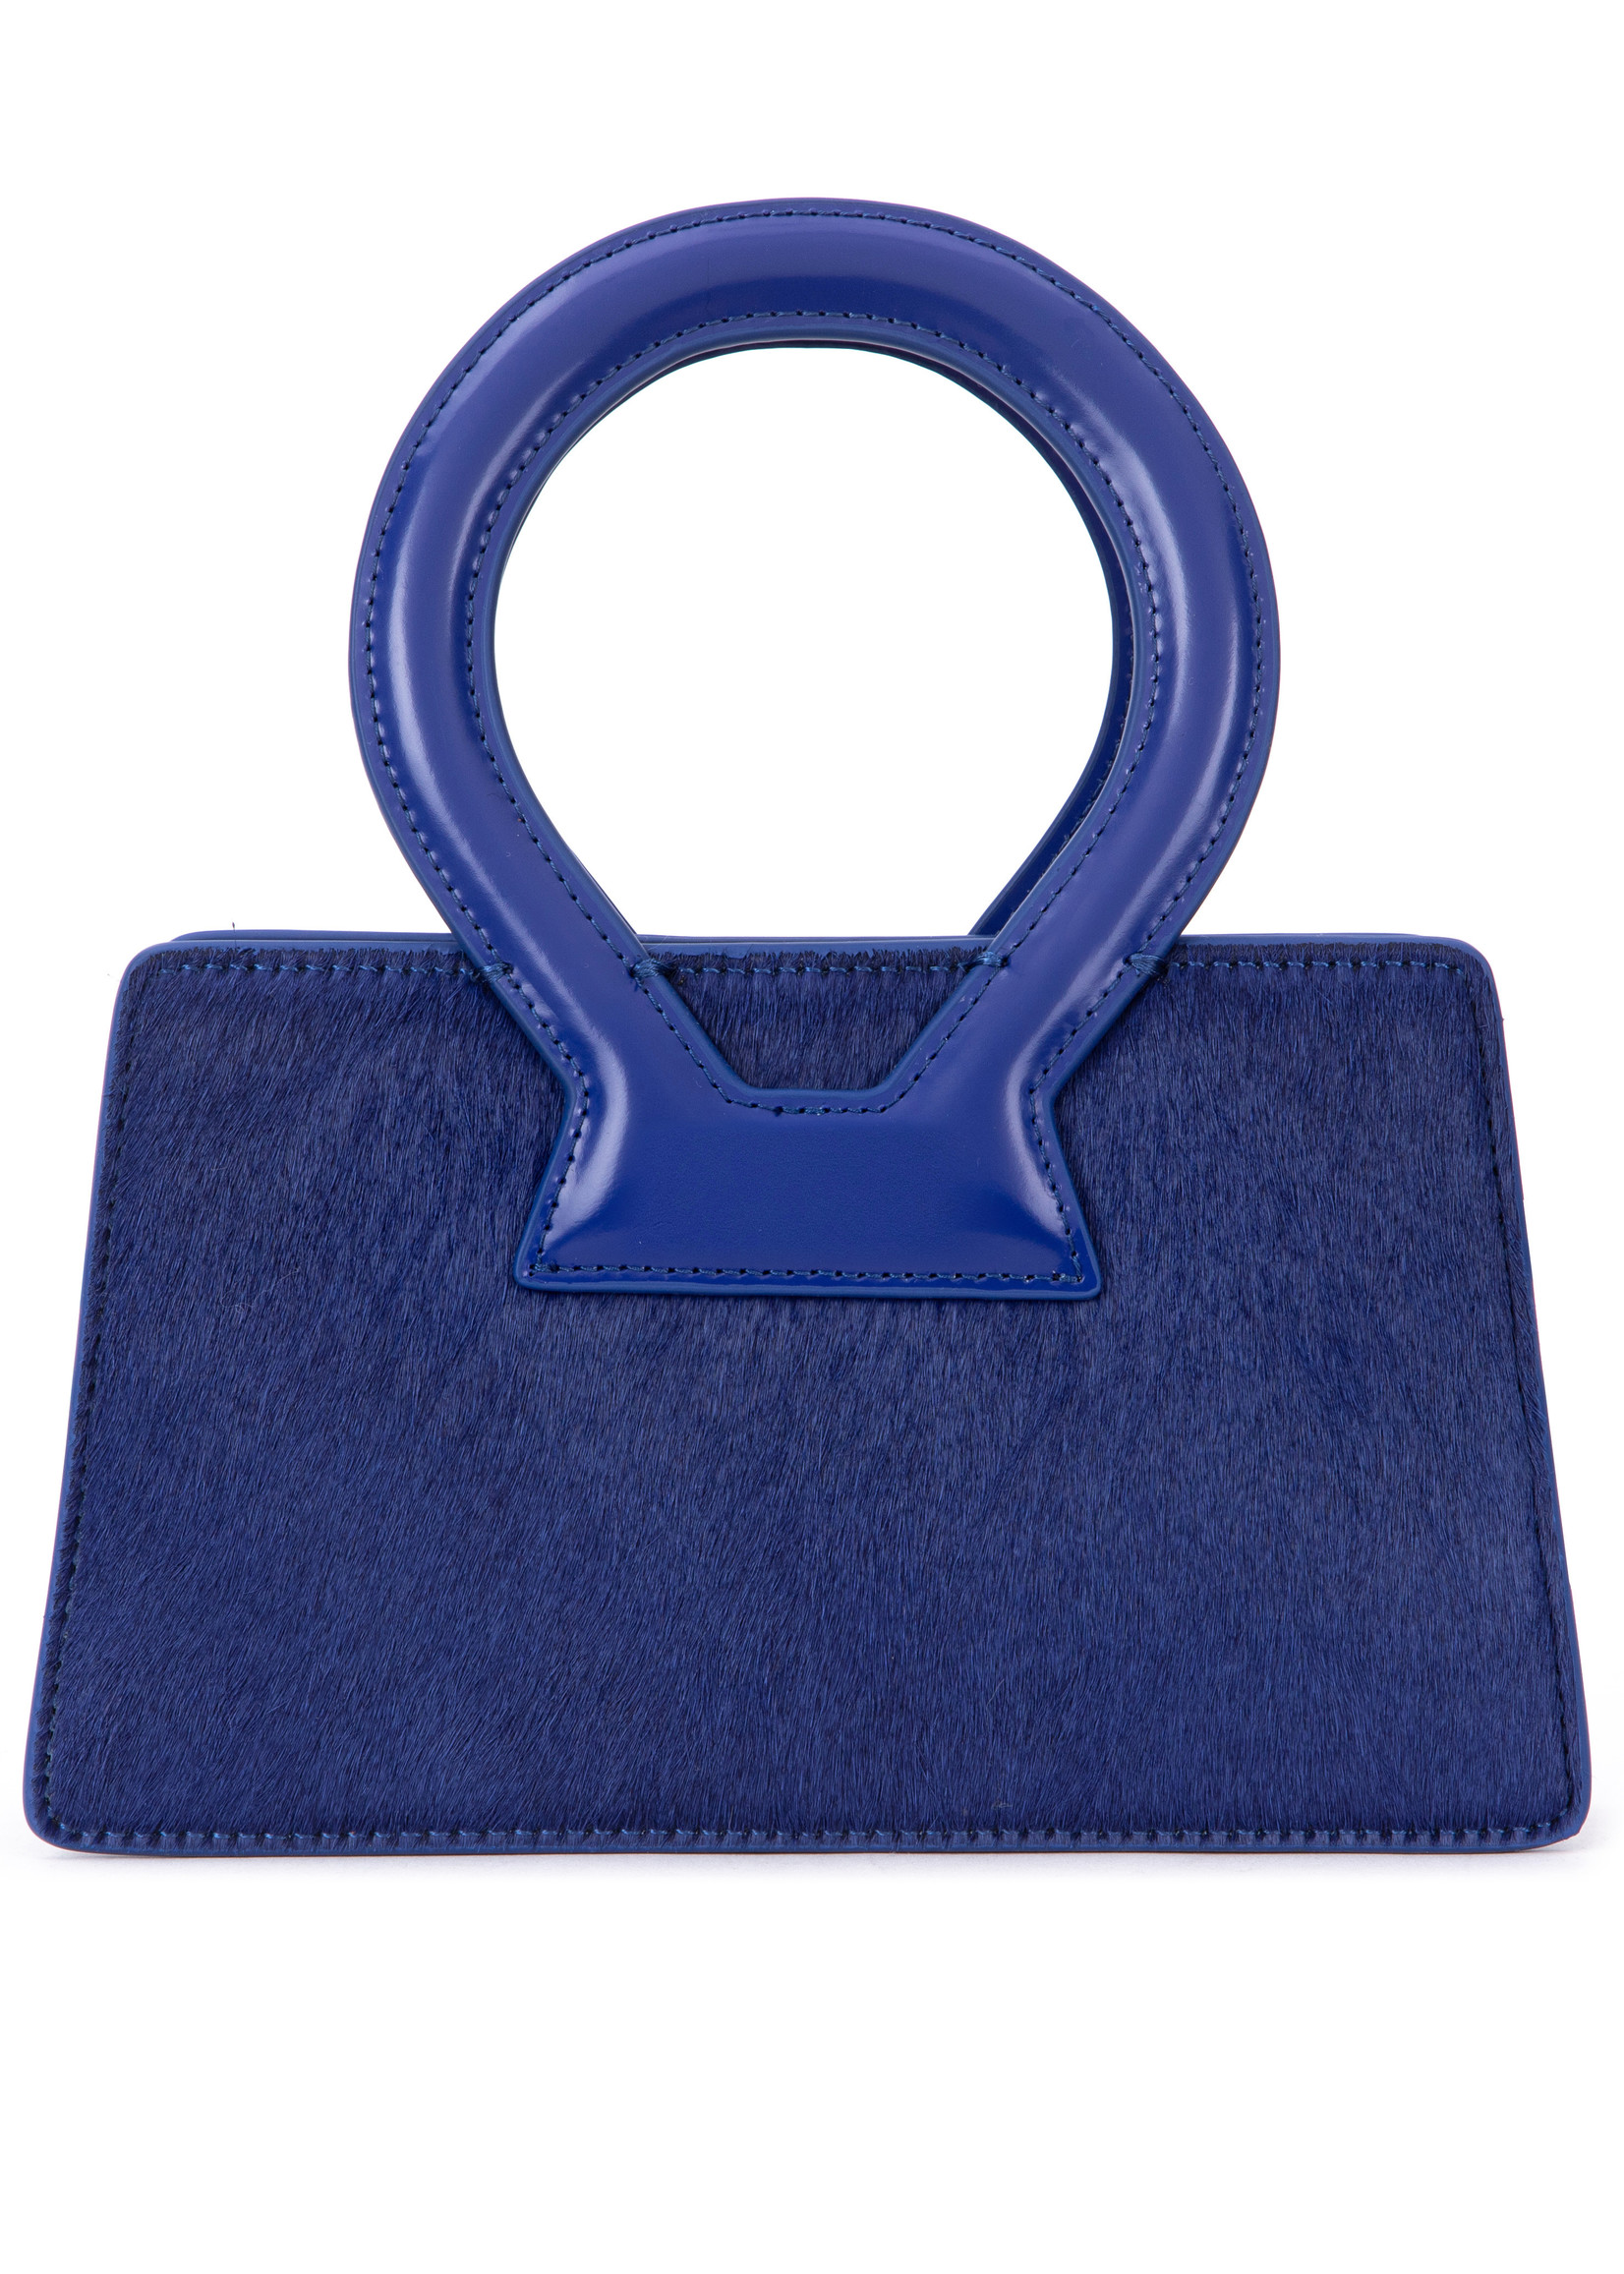 LUAR Small Ana Bag in Cobalt Blue Pony Hair